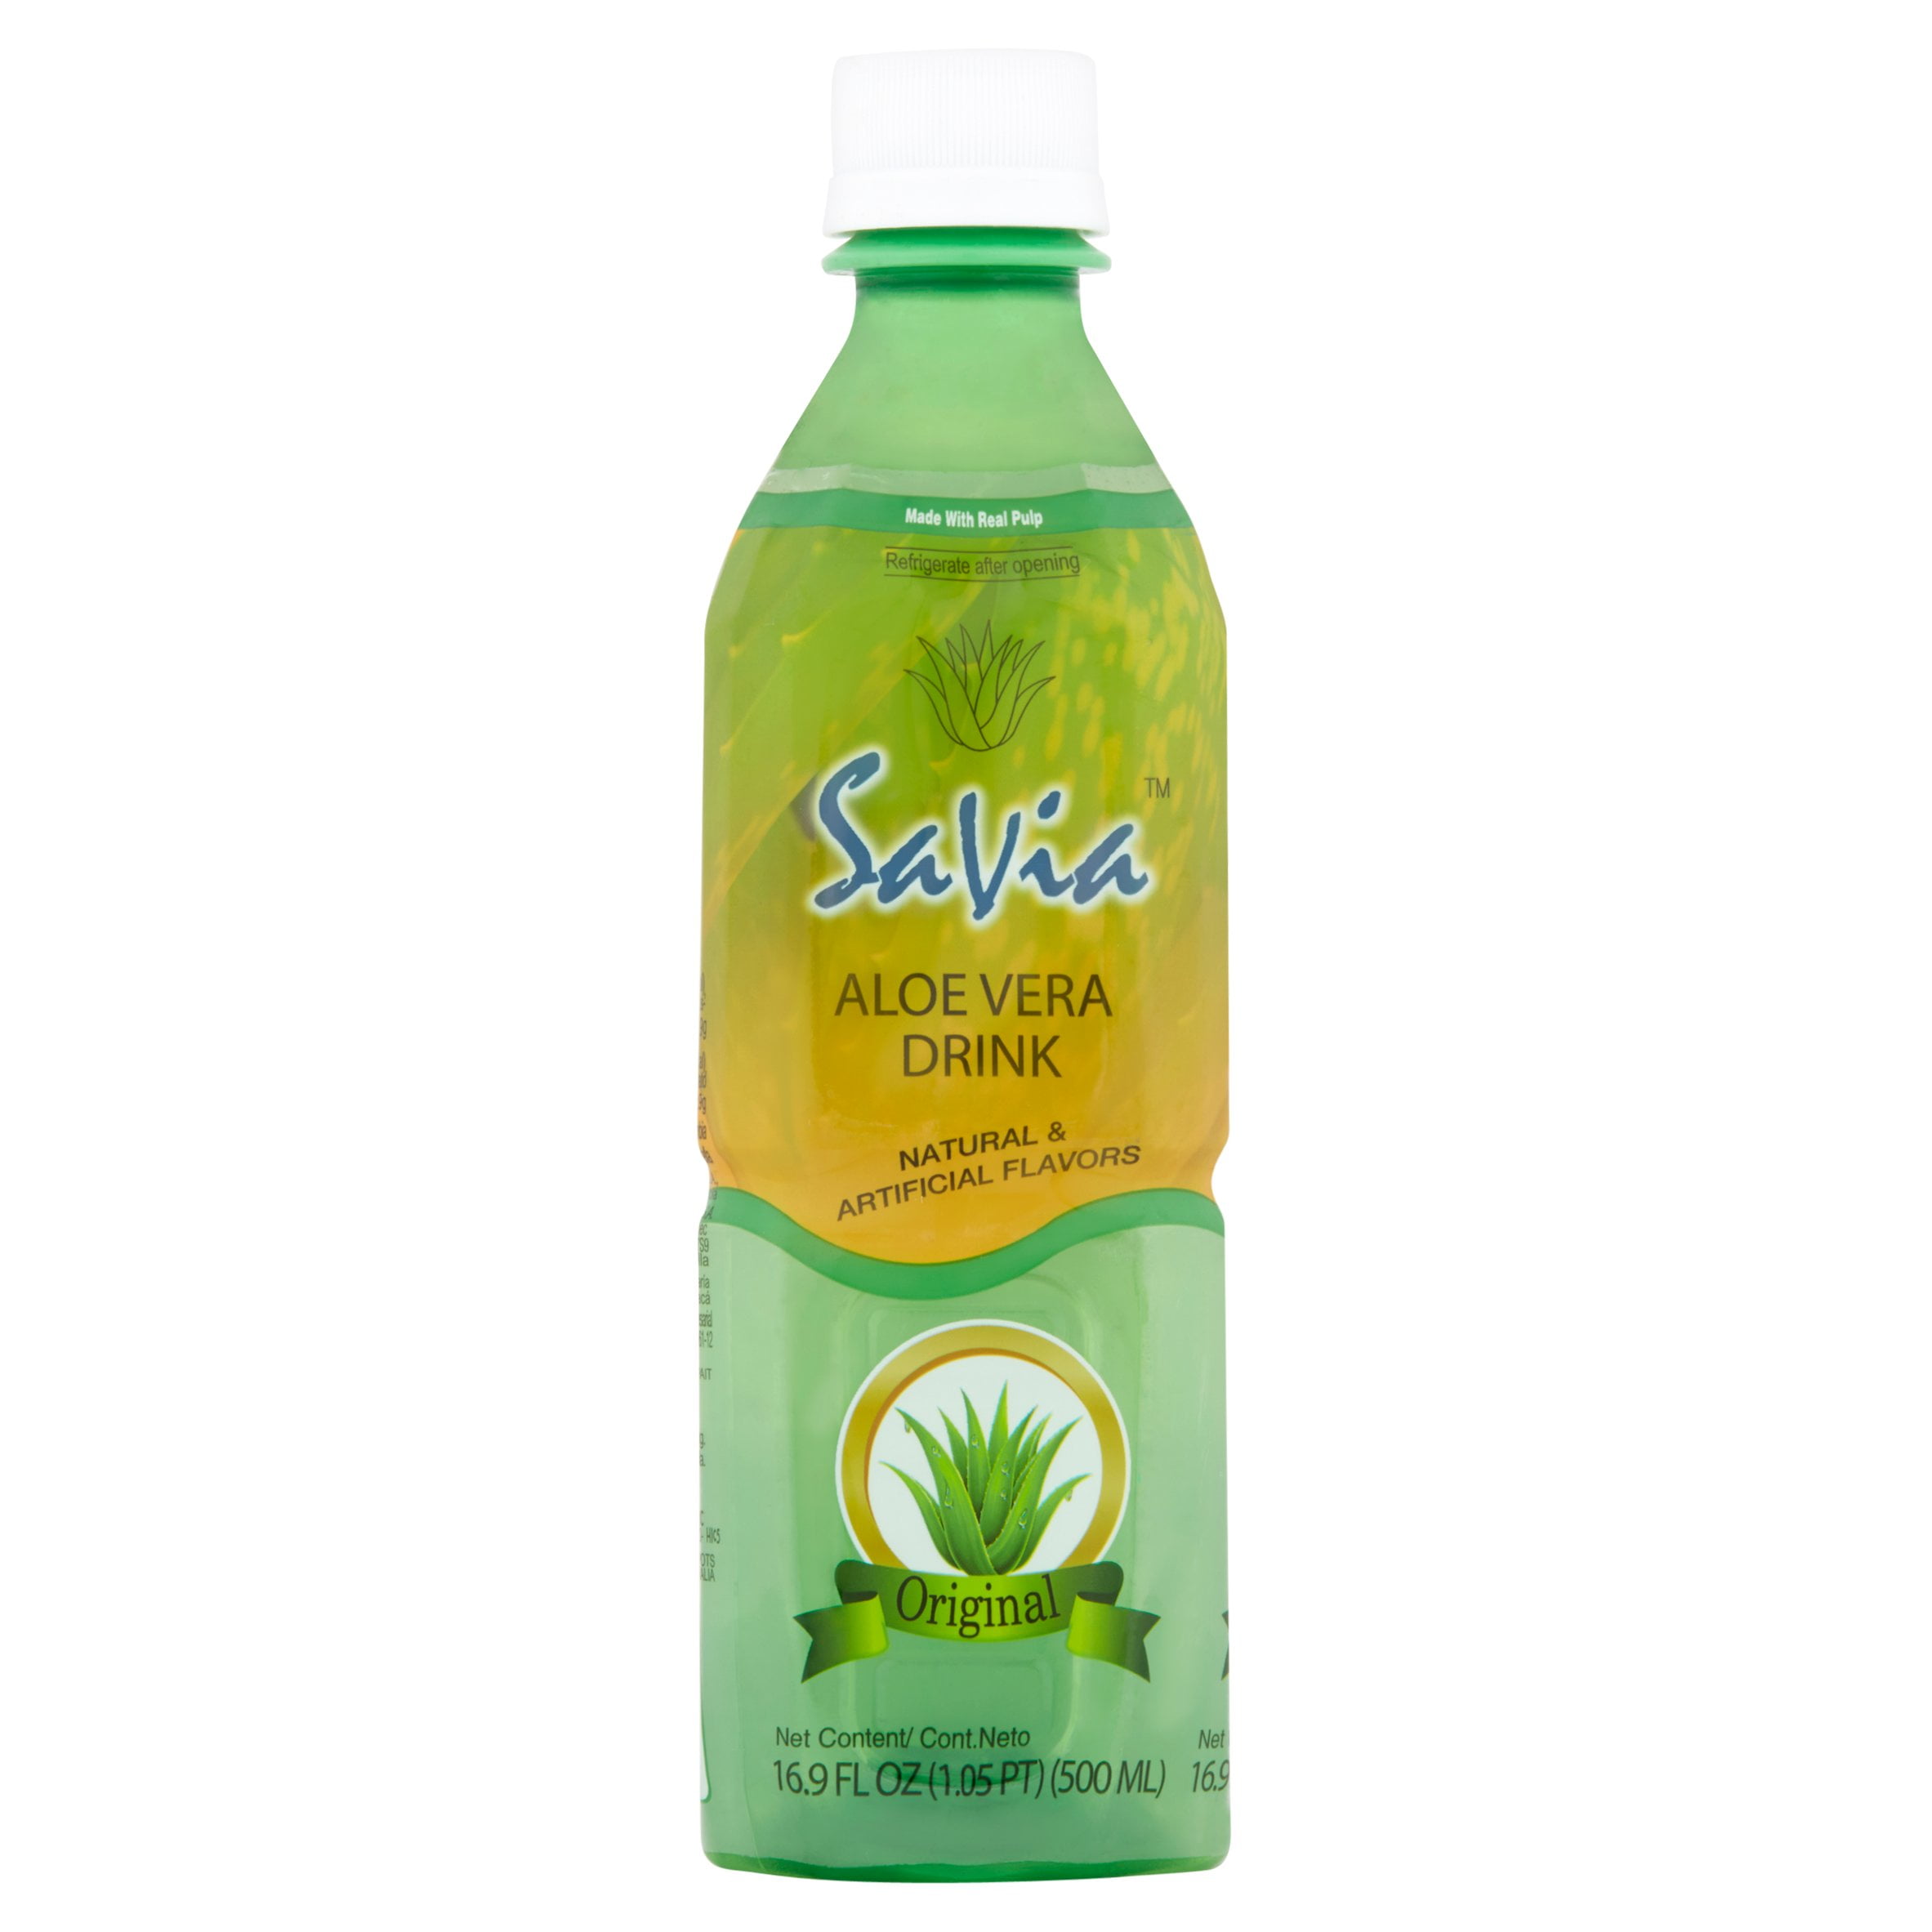 Savia Aloe Vera Drink, Original, 16.9 Fl Oz, 1 Count ...